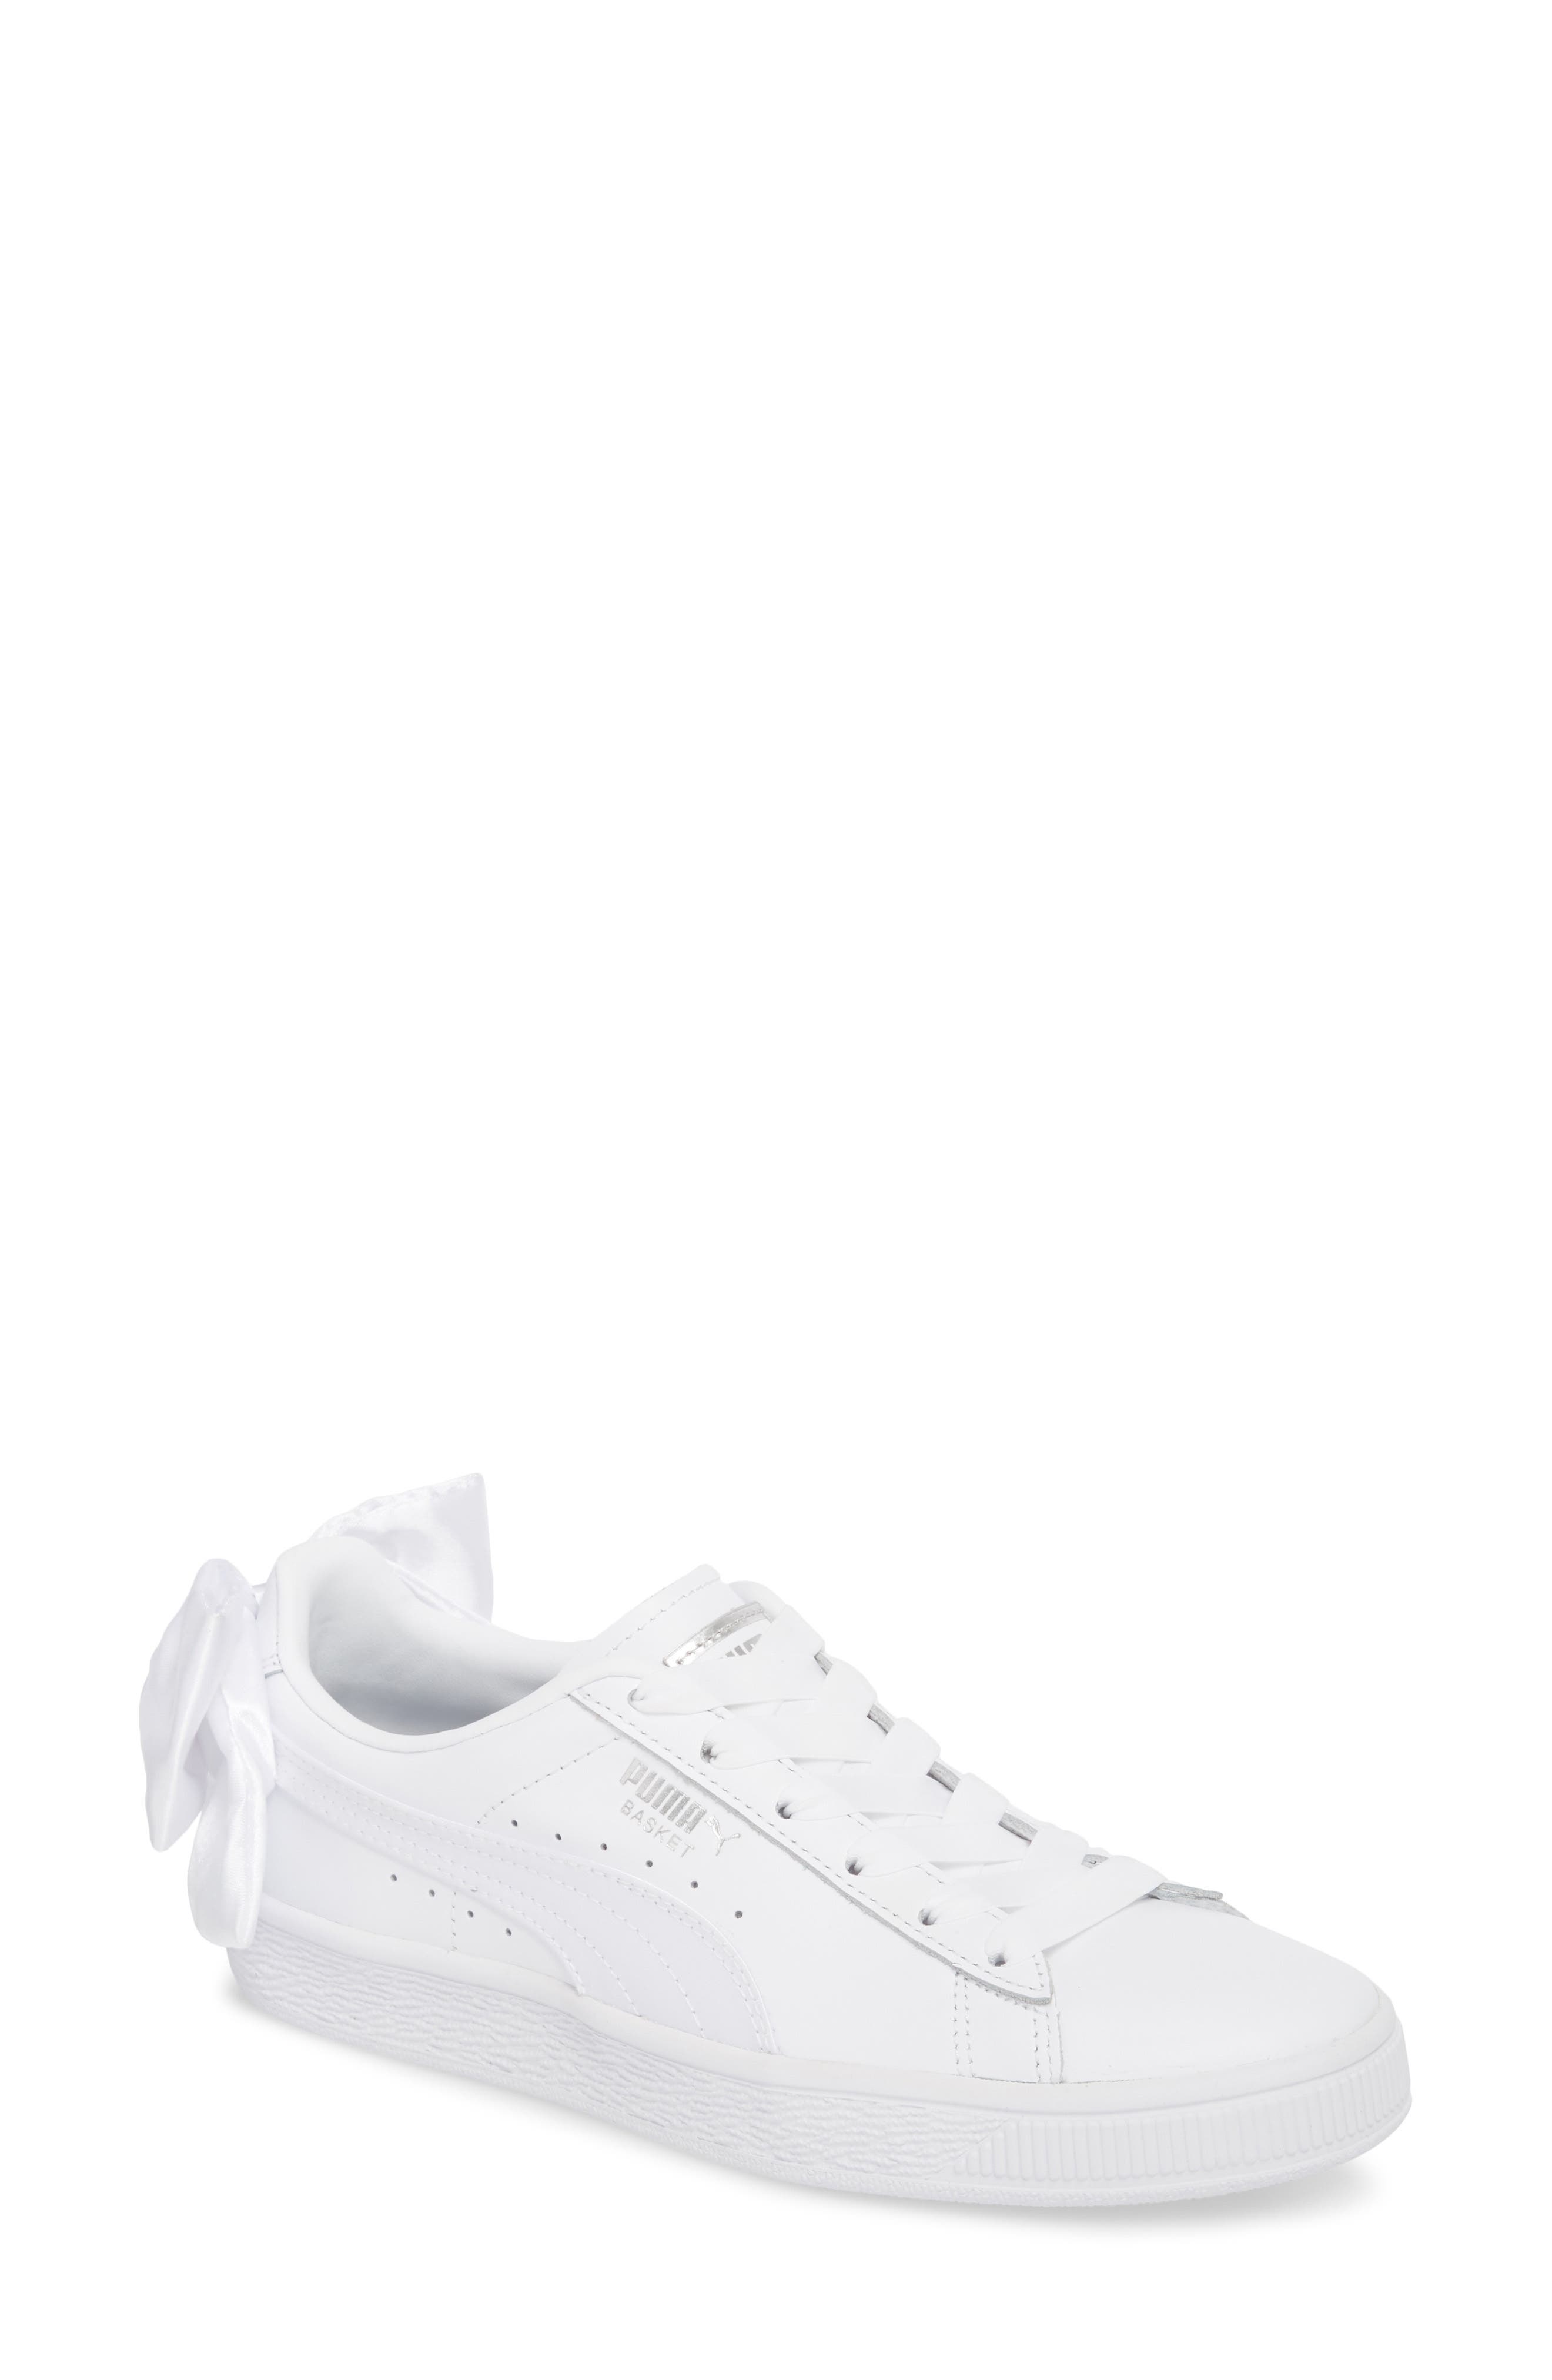 Puma Basket Bow Sneaker In White/ White 